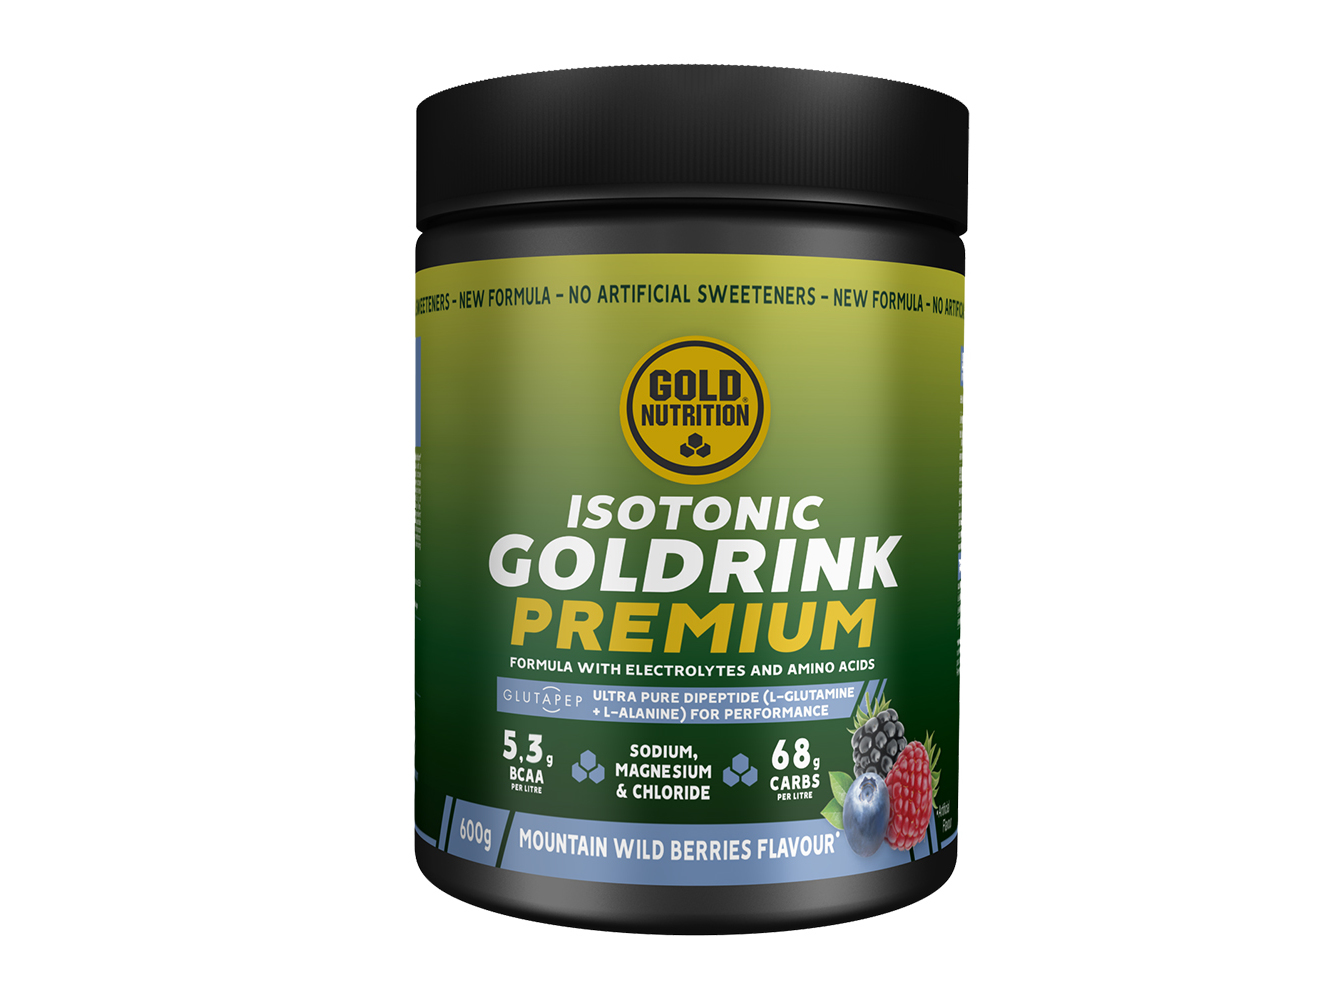 Goldrink Goldnutrition Premium F.silvestres 600g